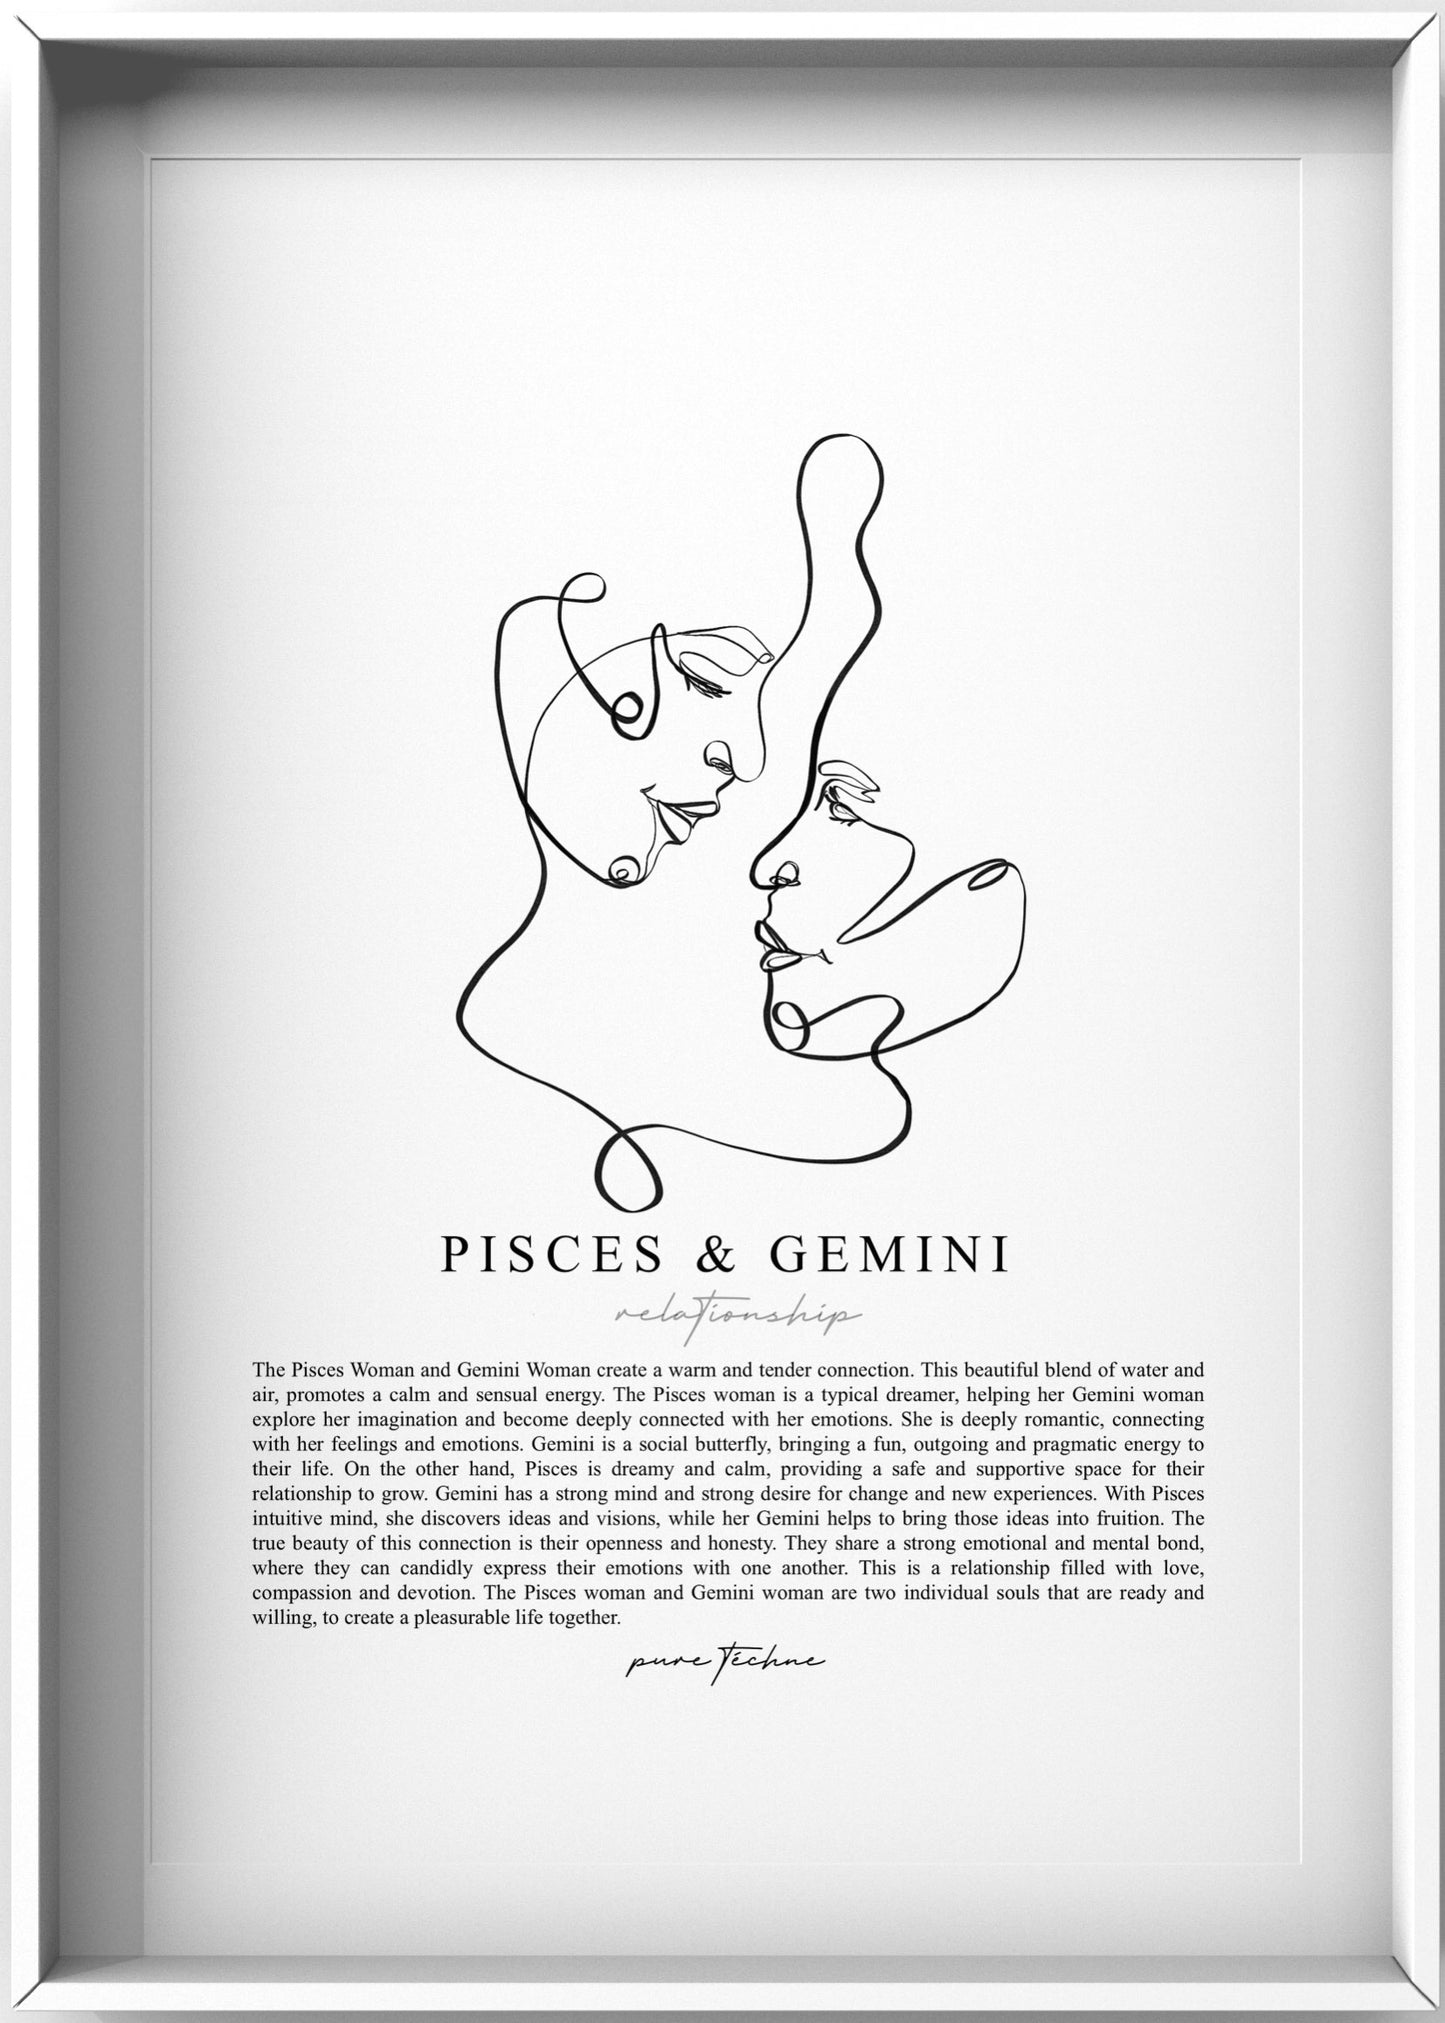 Pisces Woman & Gemini Woman